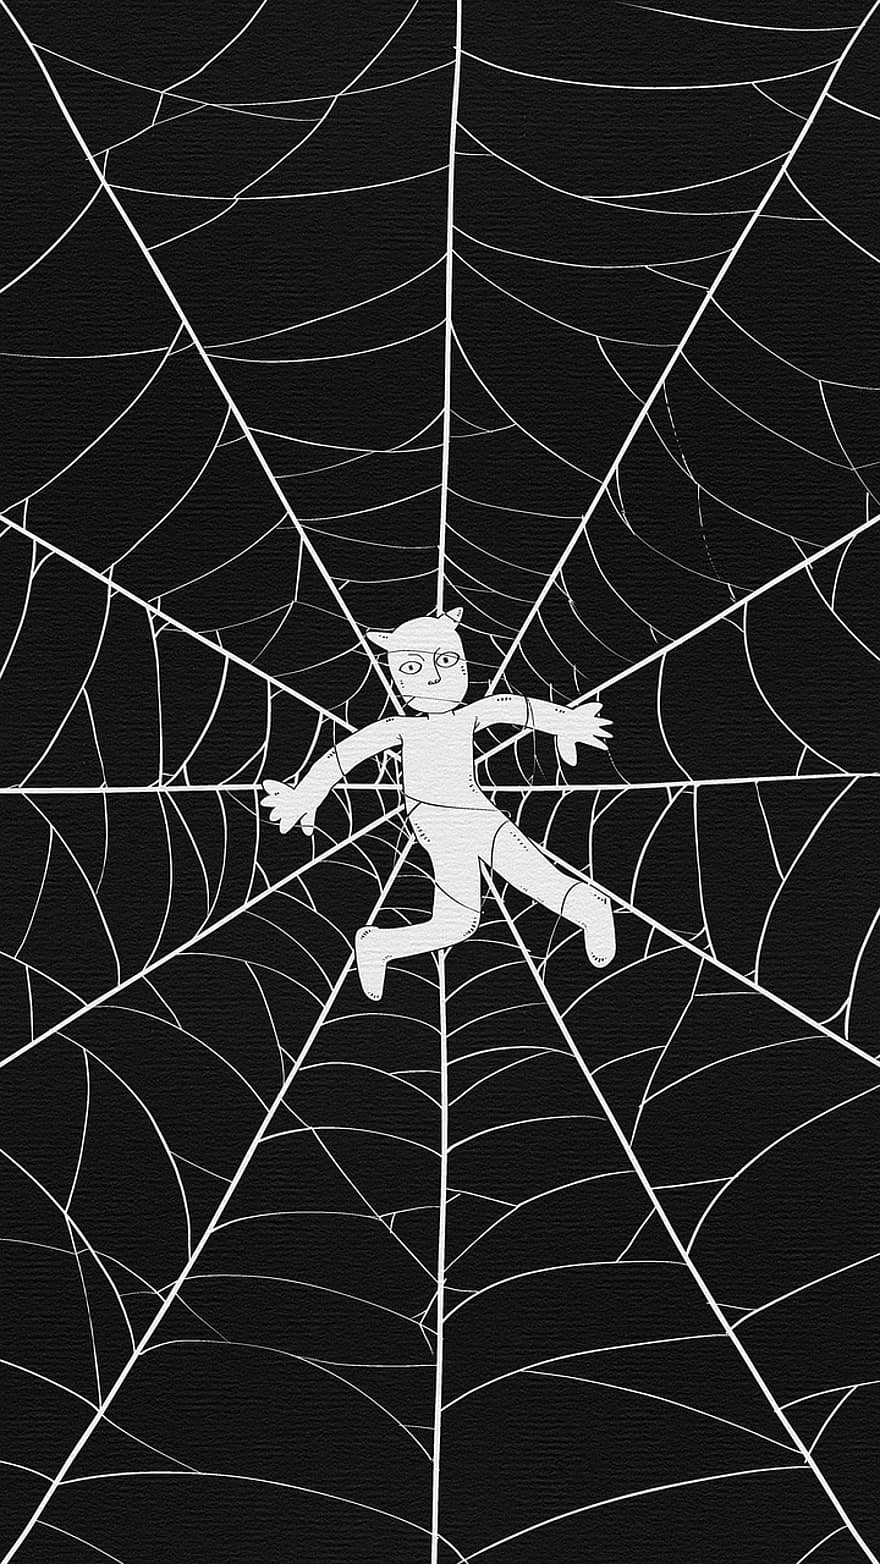 Comics, Imagination, Creativity, Spiders, Traps, Webs, Predators, Captivity, Bondage, Gray Web